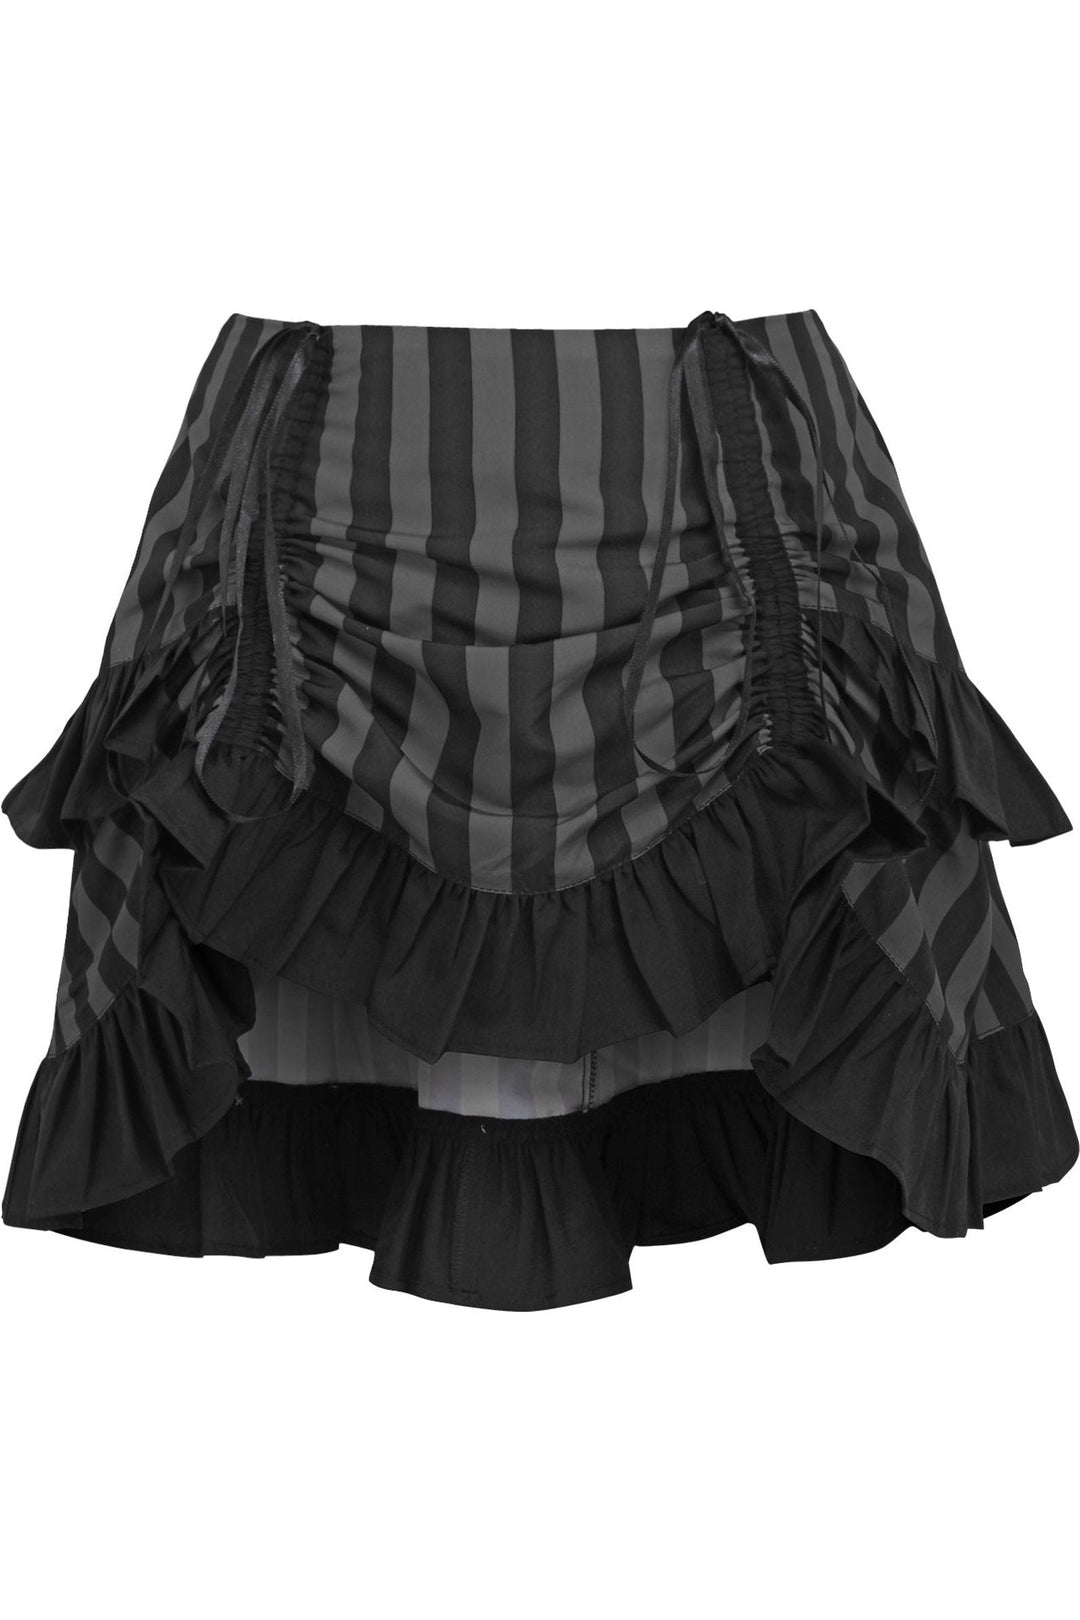 Grey/Black Striped Ruched Bustle Skirt